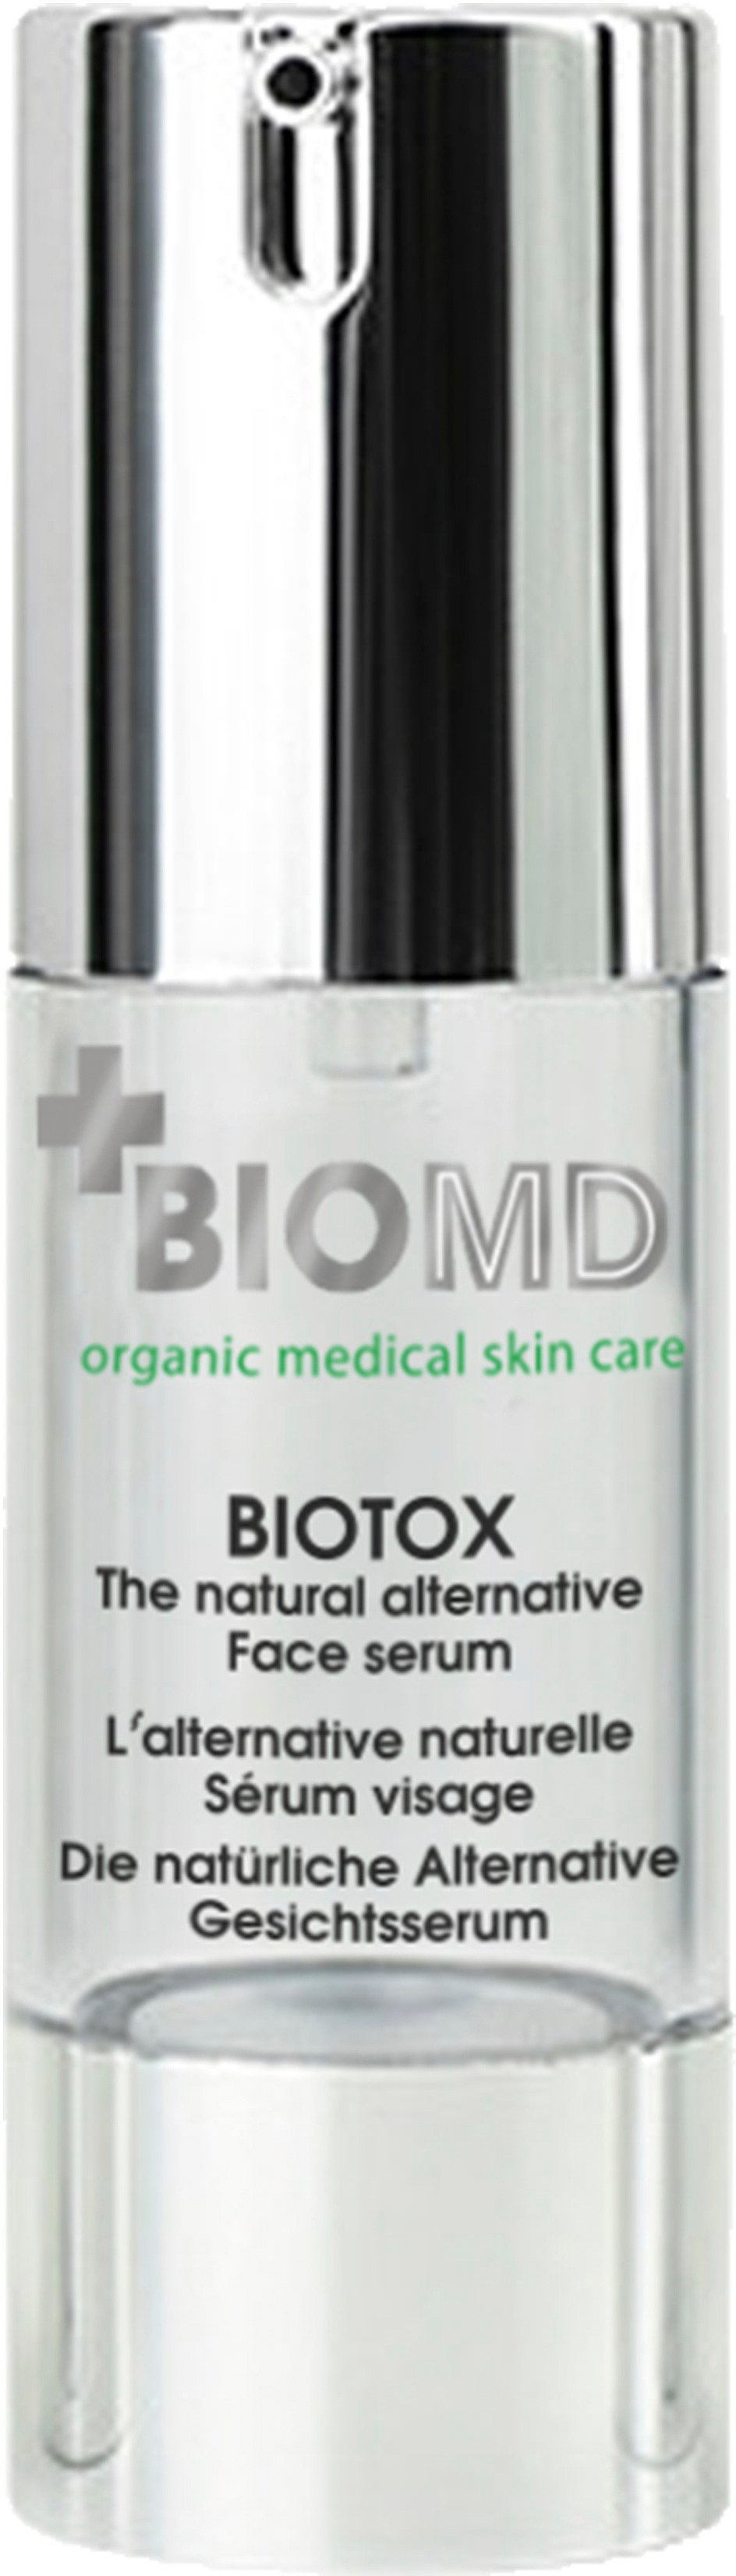 BioMD BIOTOX Face Serum 30 ml